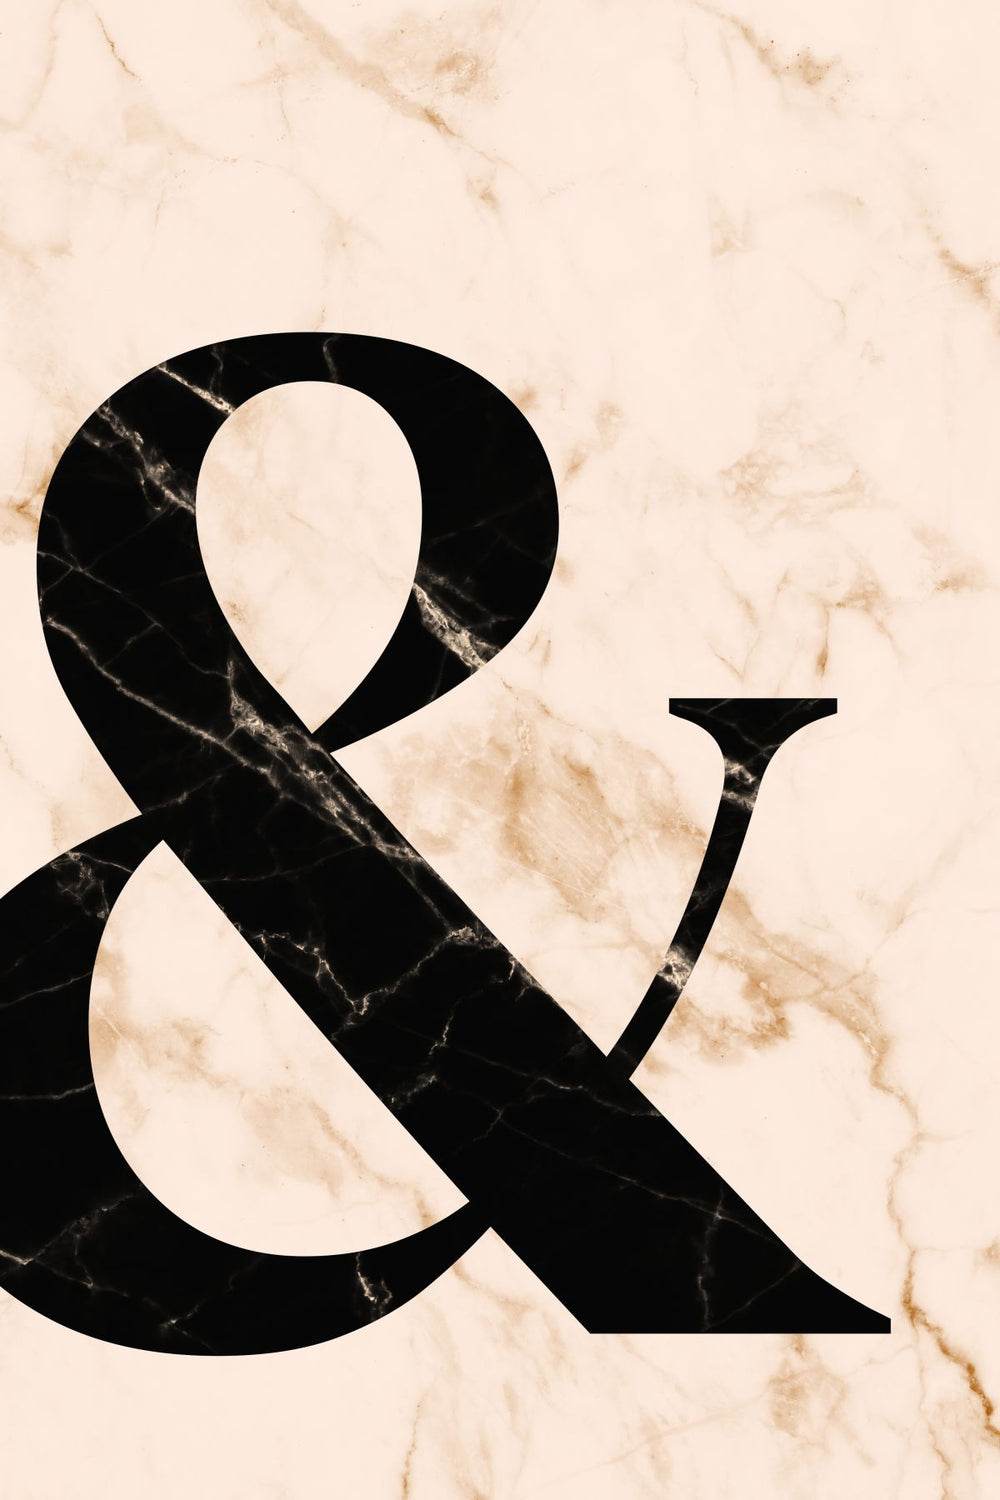 Ampersand Typography